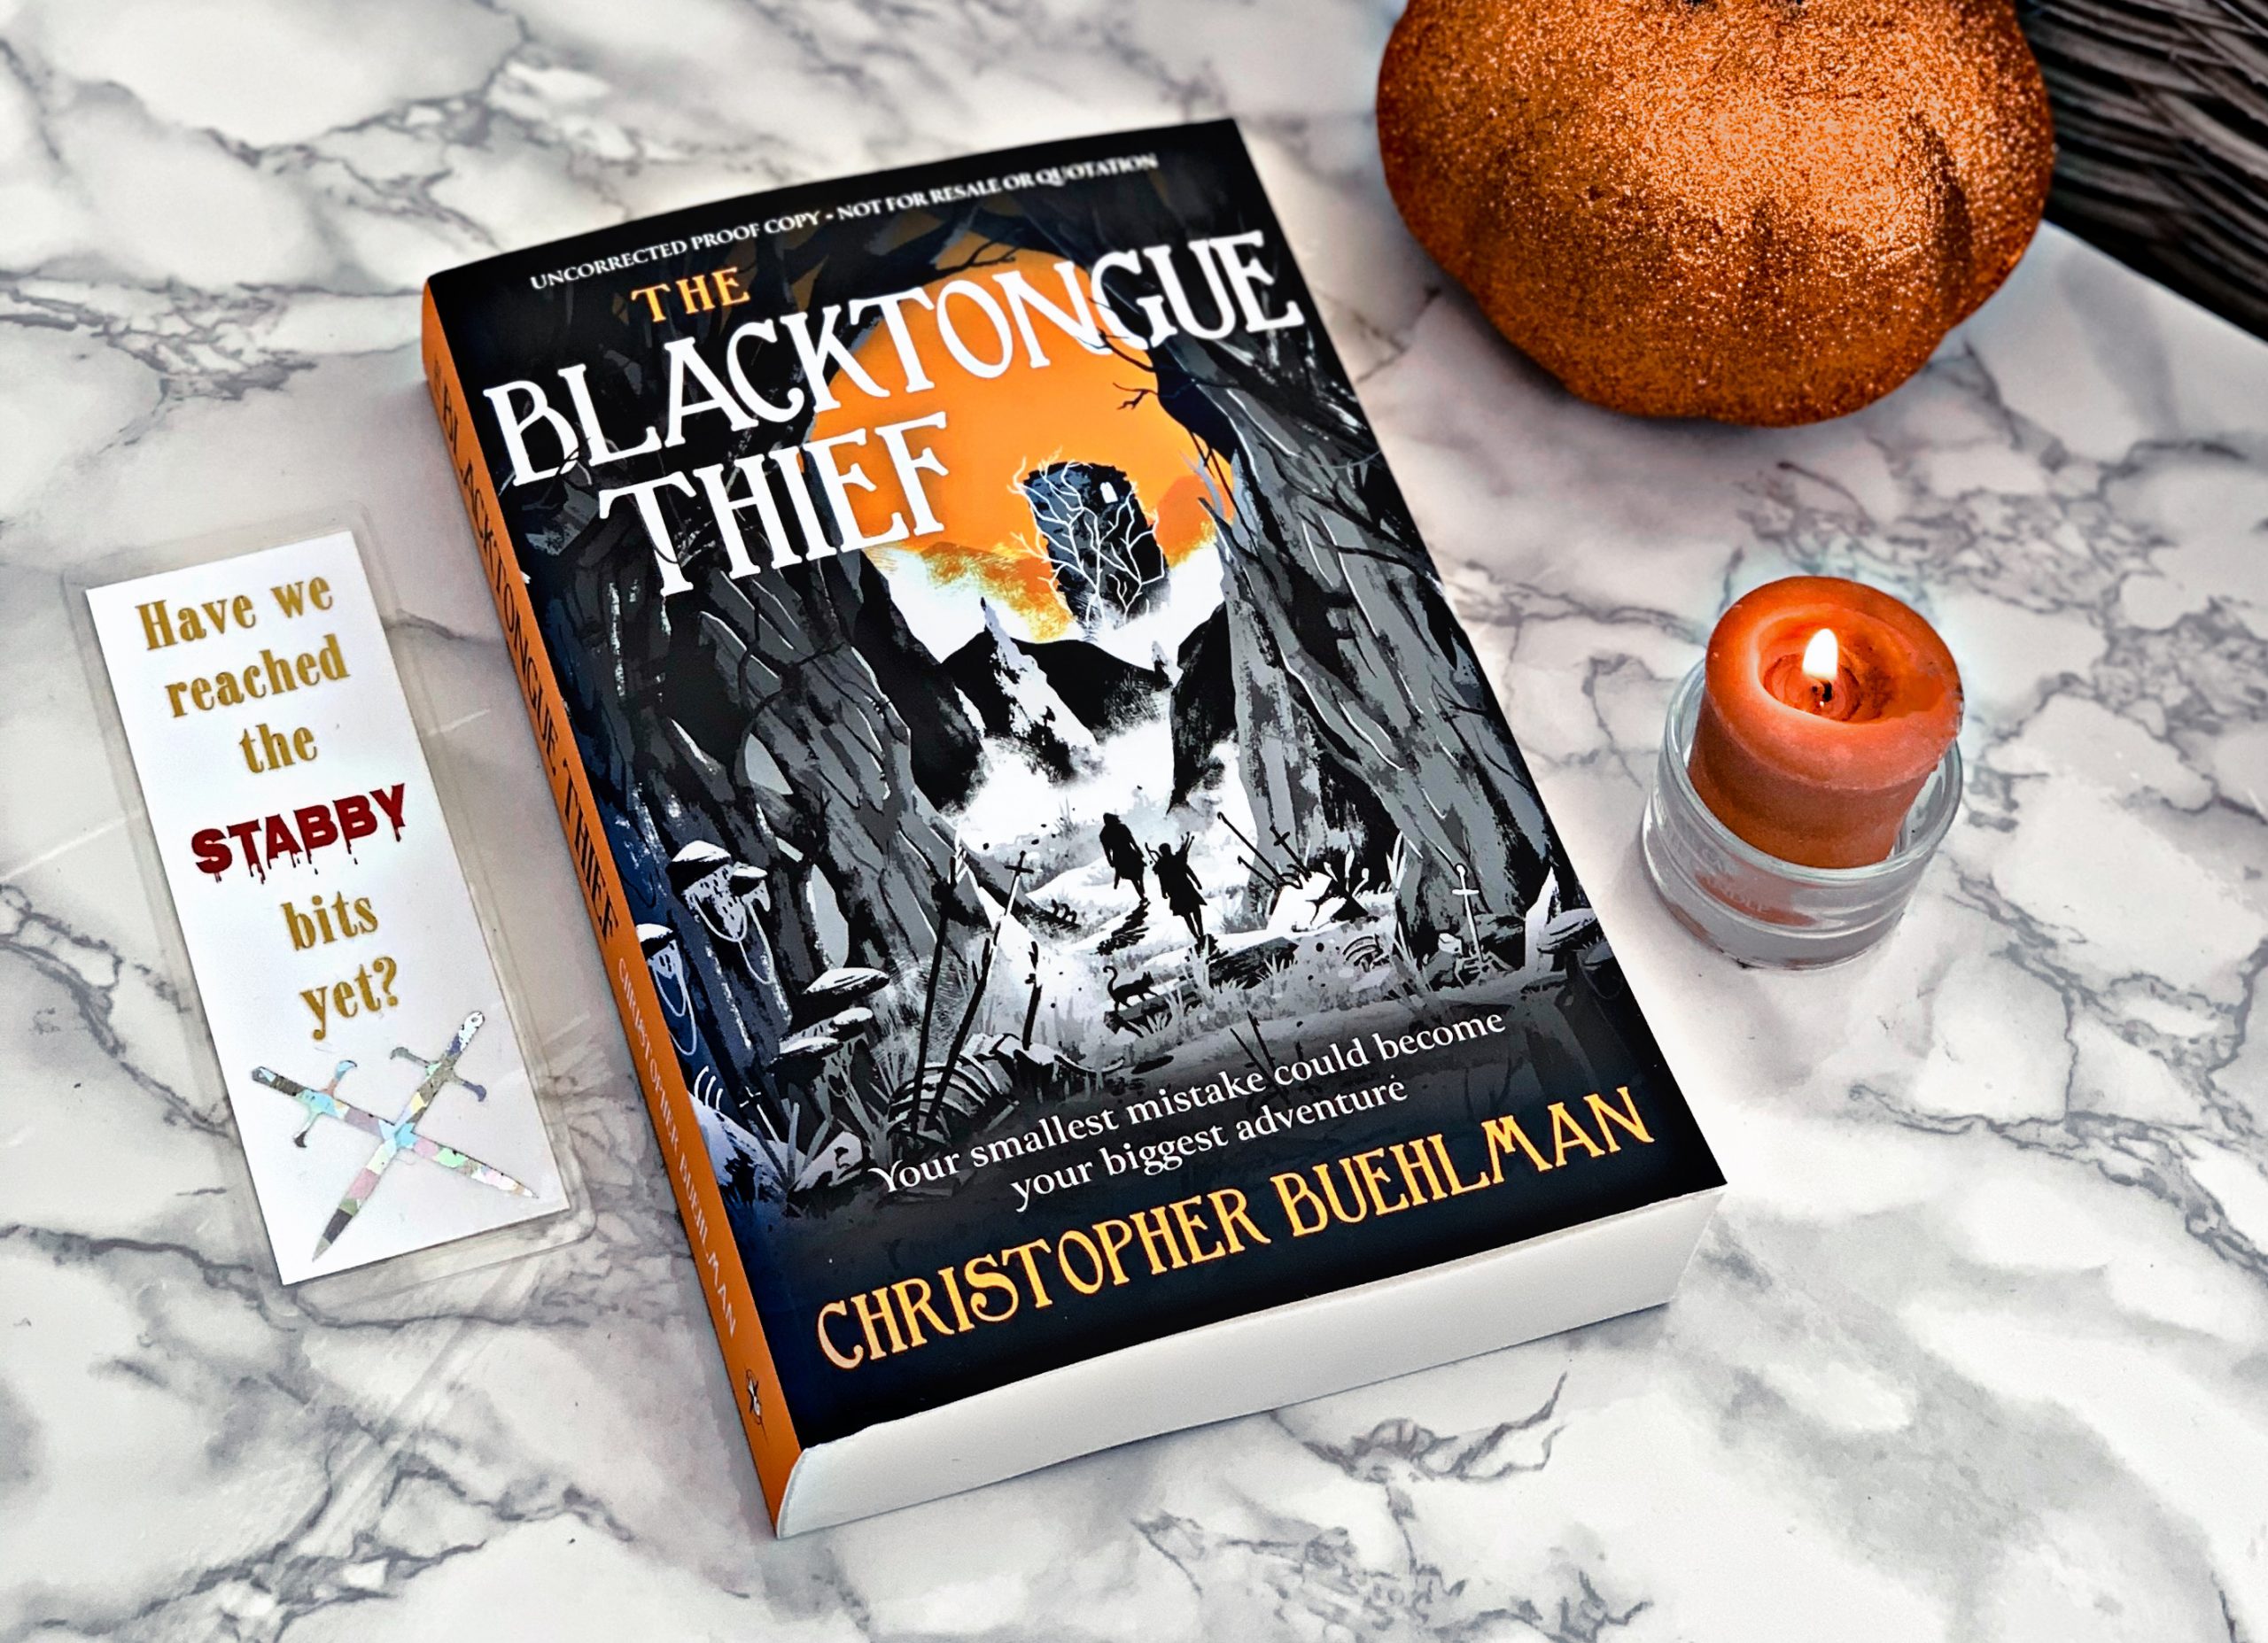 the blacktongue thief sneak peek christopher buehlman